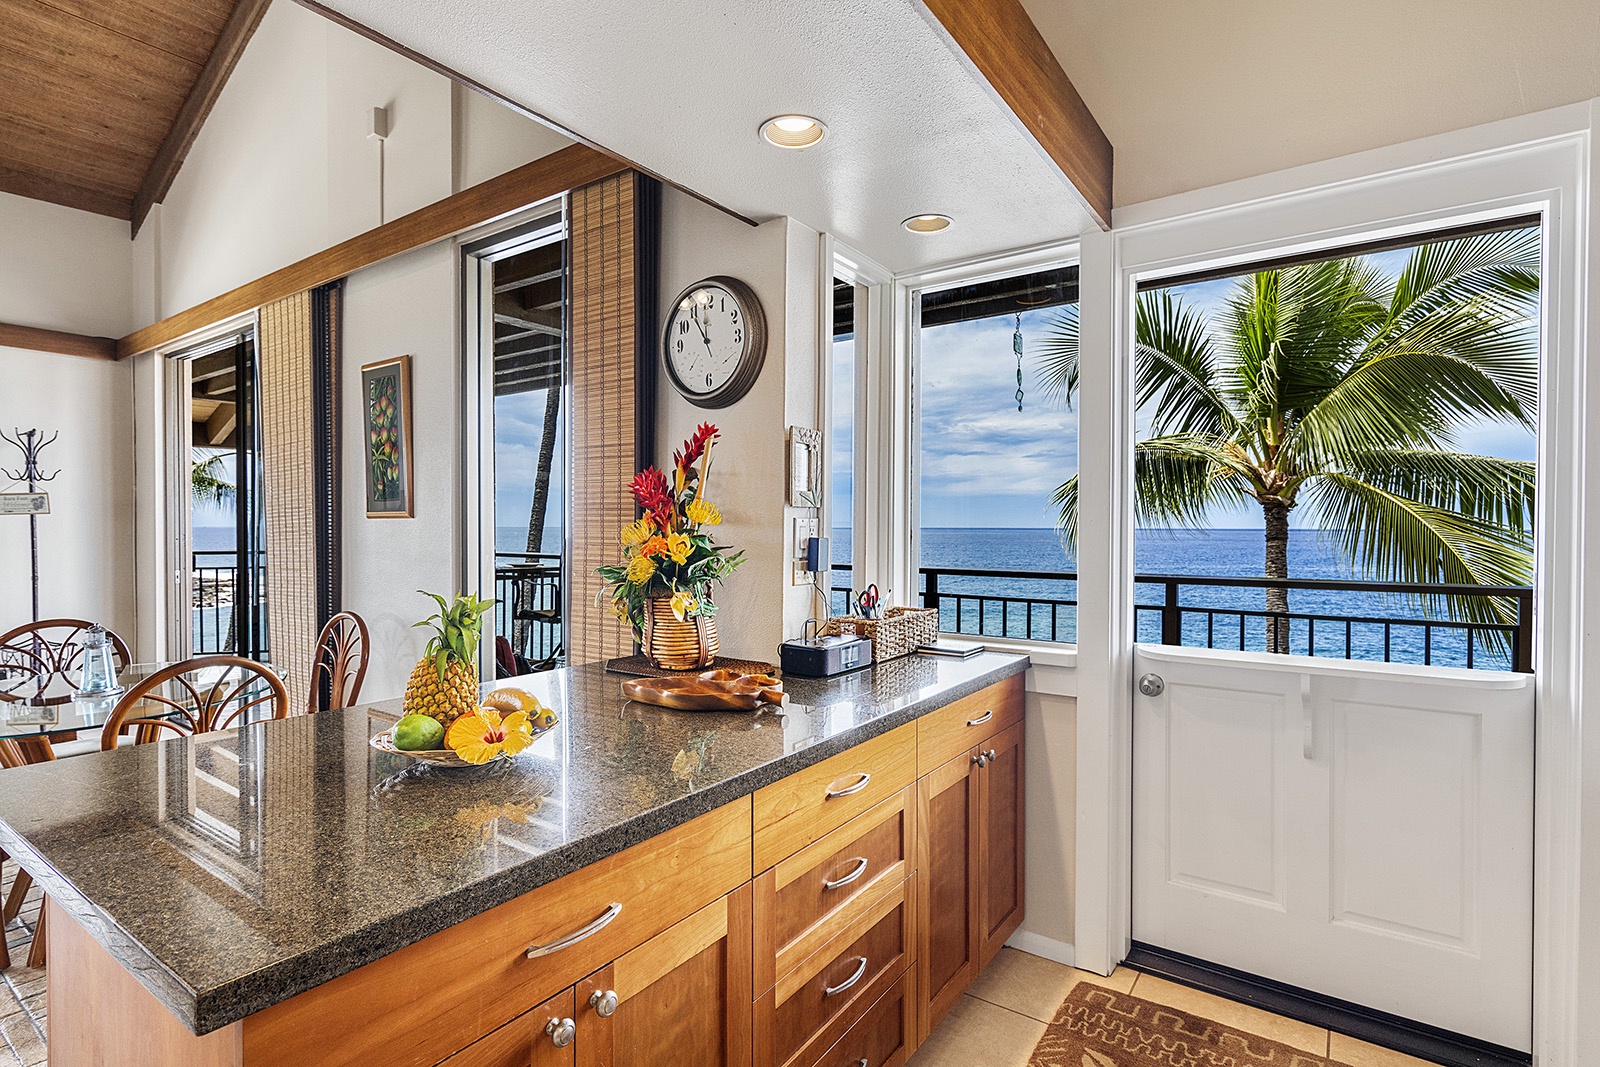 Kailua Kona Vacation Rentals, Kona Makai 6301 - Butler door in the kitchen makes for a Chef's dream!